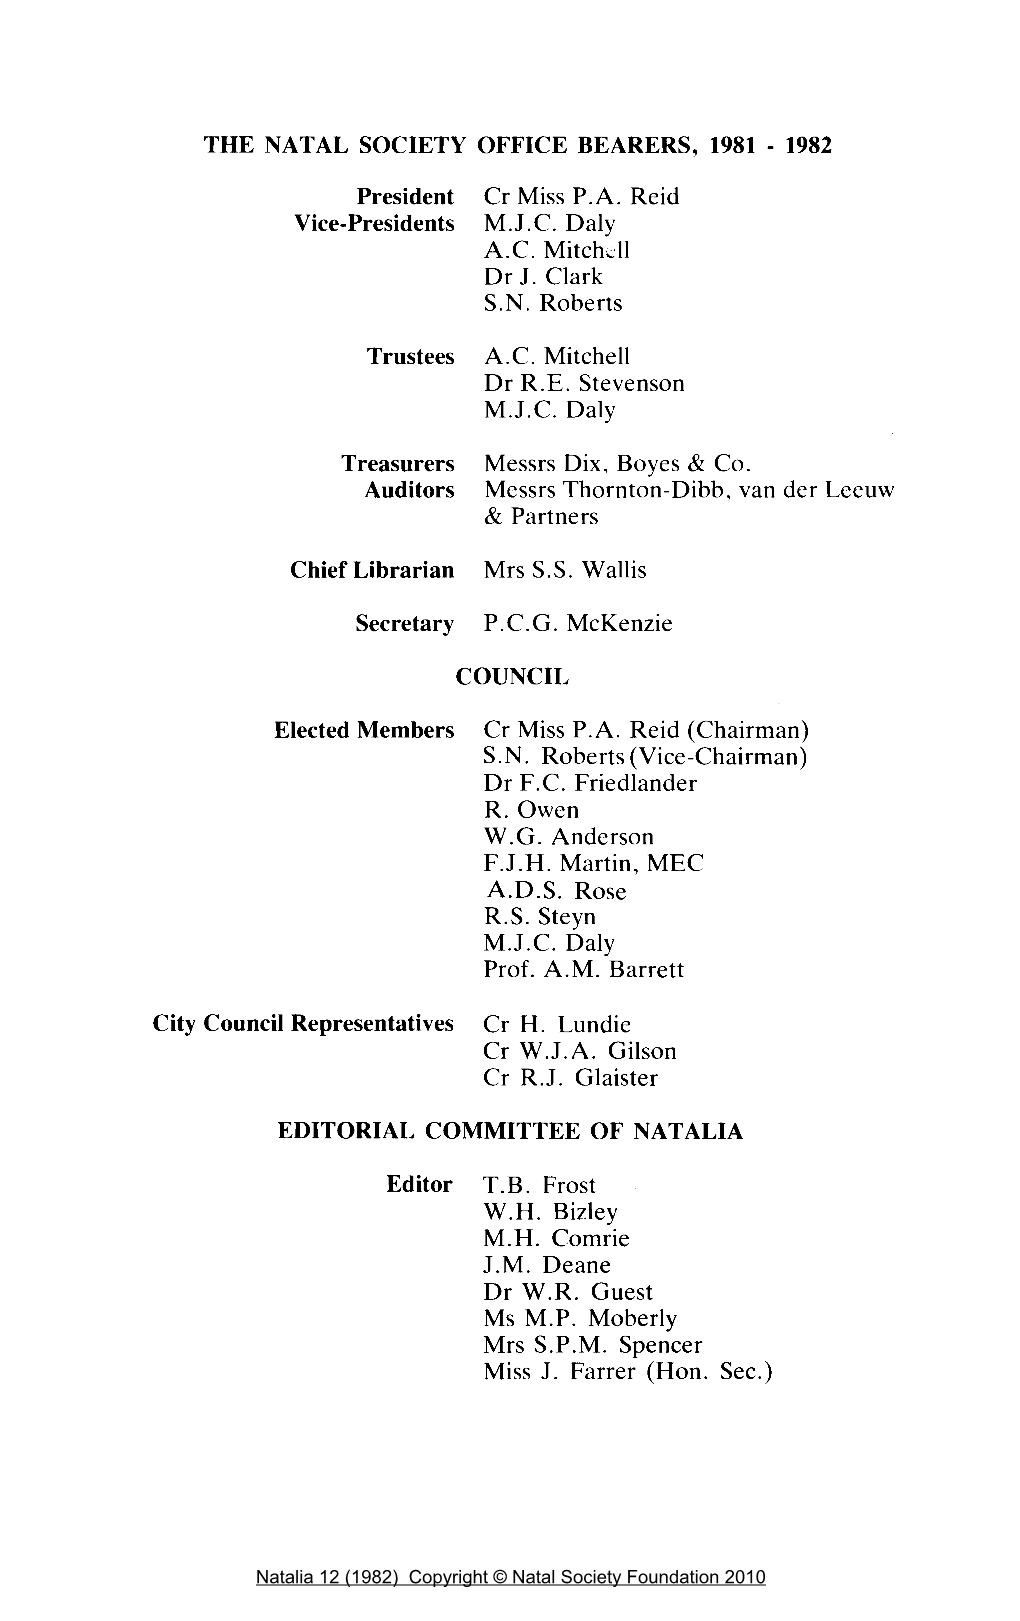 The Natal Society Office Bearers, 1981 - 1982